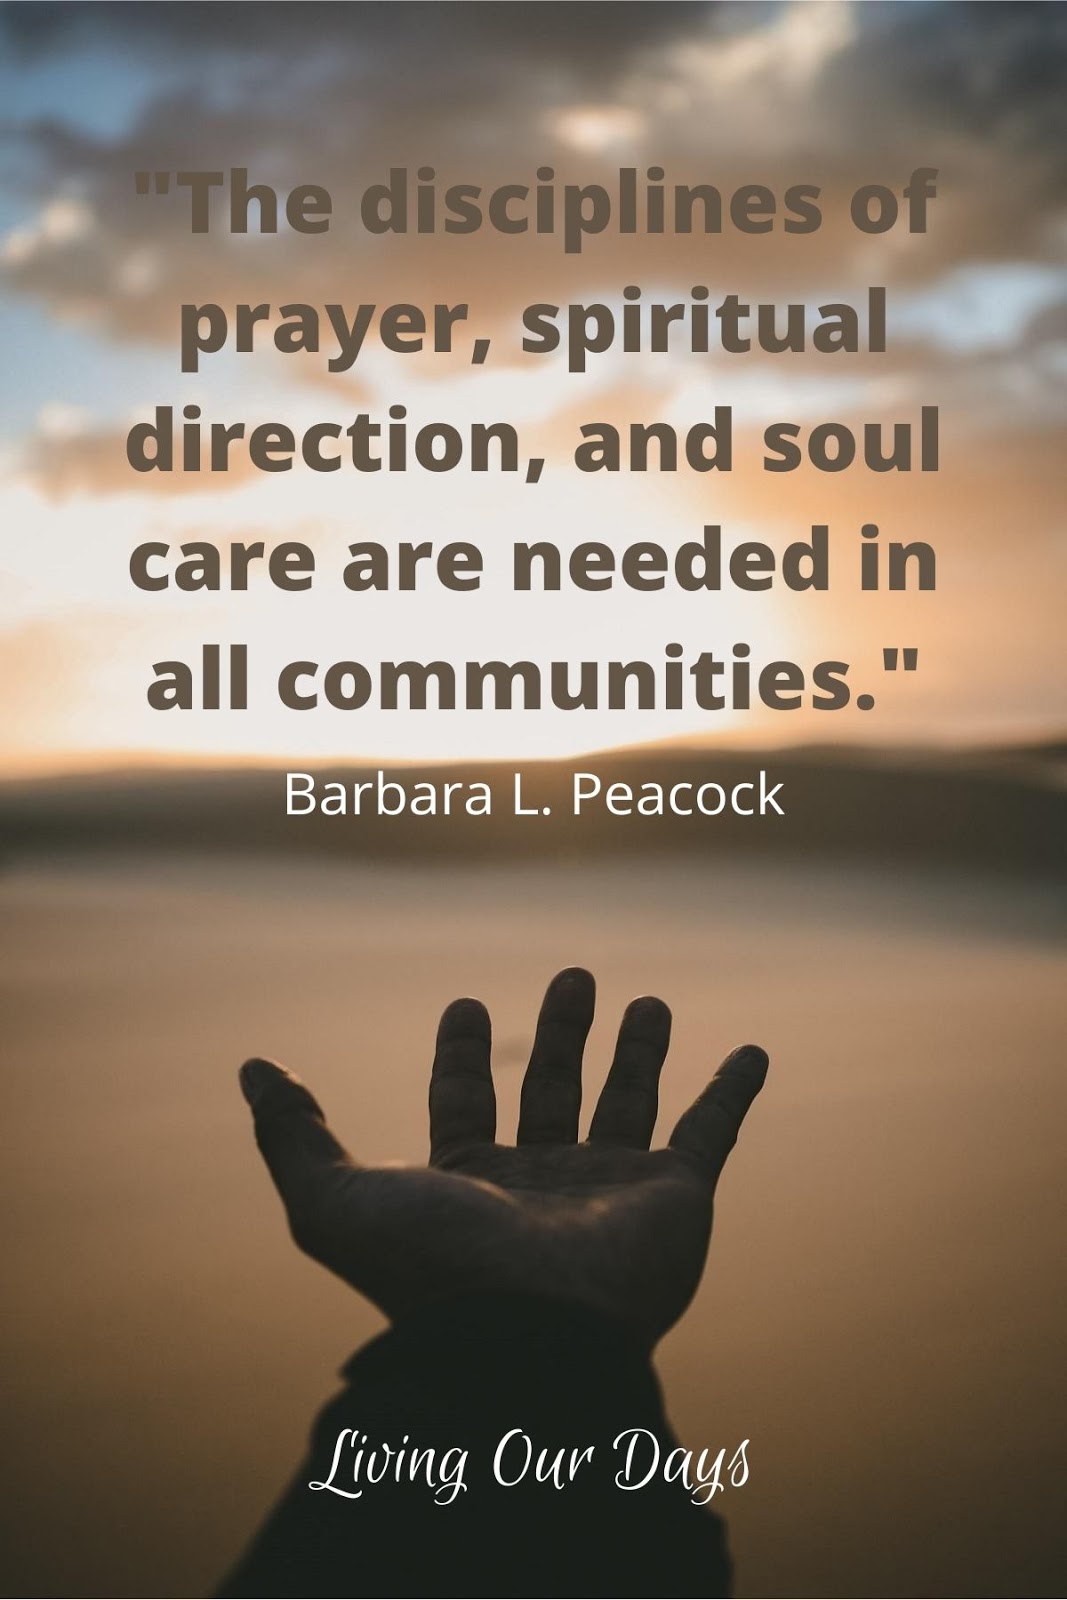 https://1.bp.blogspot.com/-_nWiQ8nTwzo/X0ciz_ojV-I/AAAAAAAARgo/1-8jAiYhb_ML7Bfdt00sjUZ8ik5kN8PeACLcBGAsYHQ/s1600/the-disciplines-of-prayer-spiritual-direction-and-soul-care-are-needed-in-all-communities._.jpg